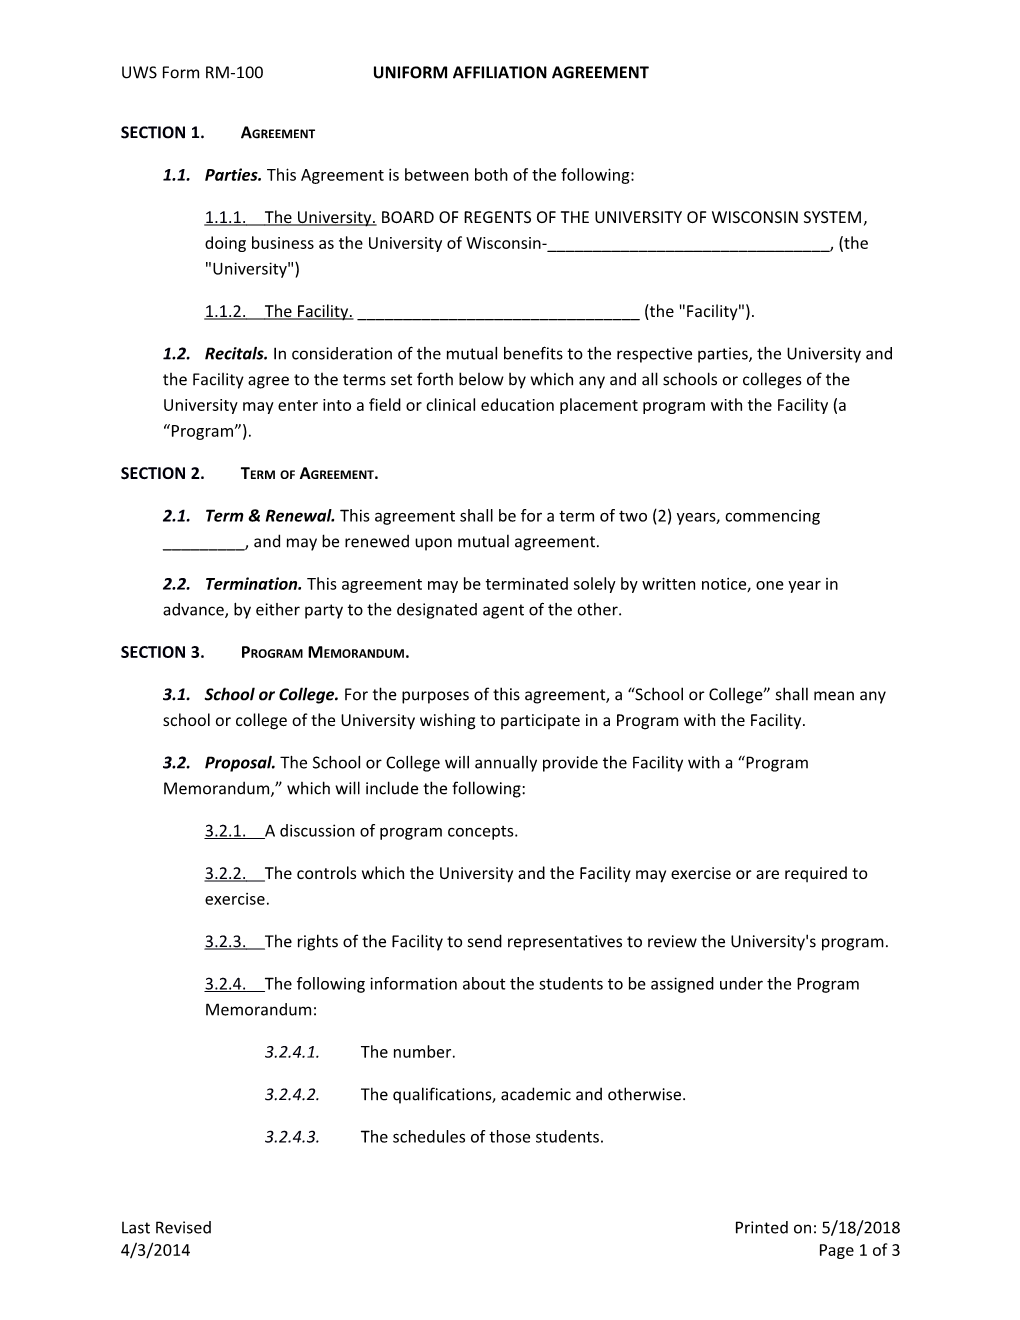 UWS Form RM-100 Uniform Affiliation Agreement